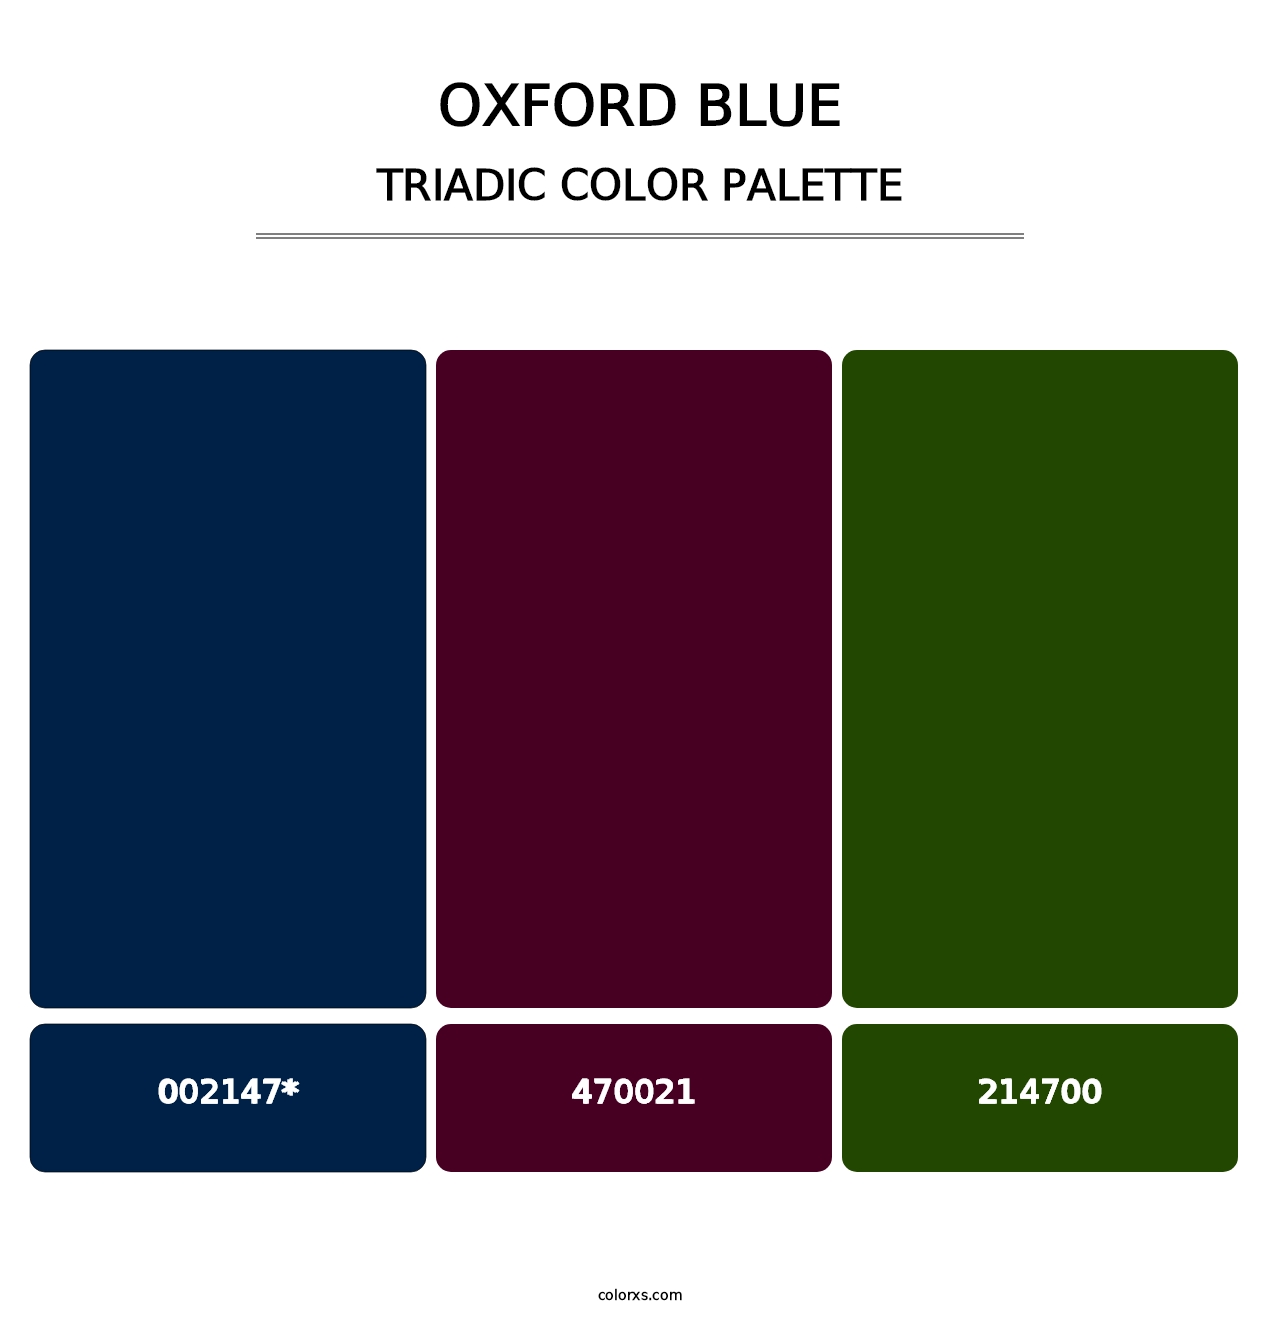 Oxford Blue - Triadic Color Palette